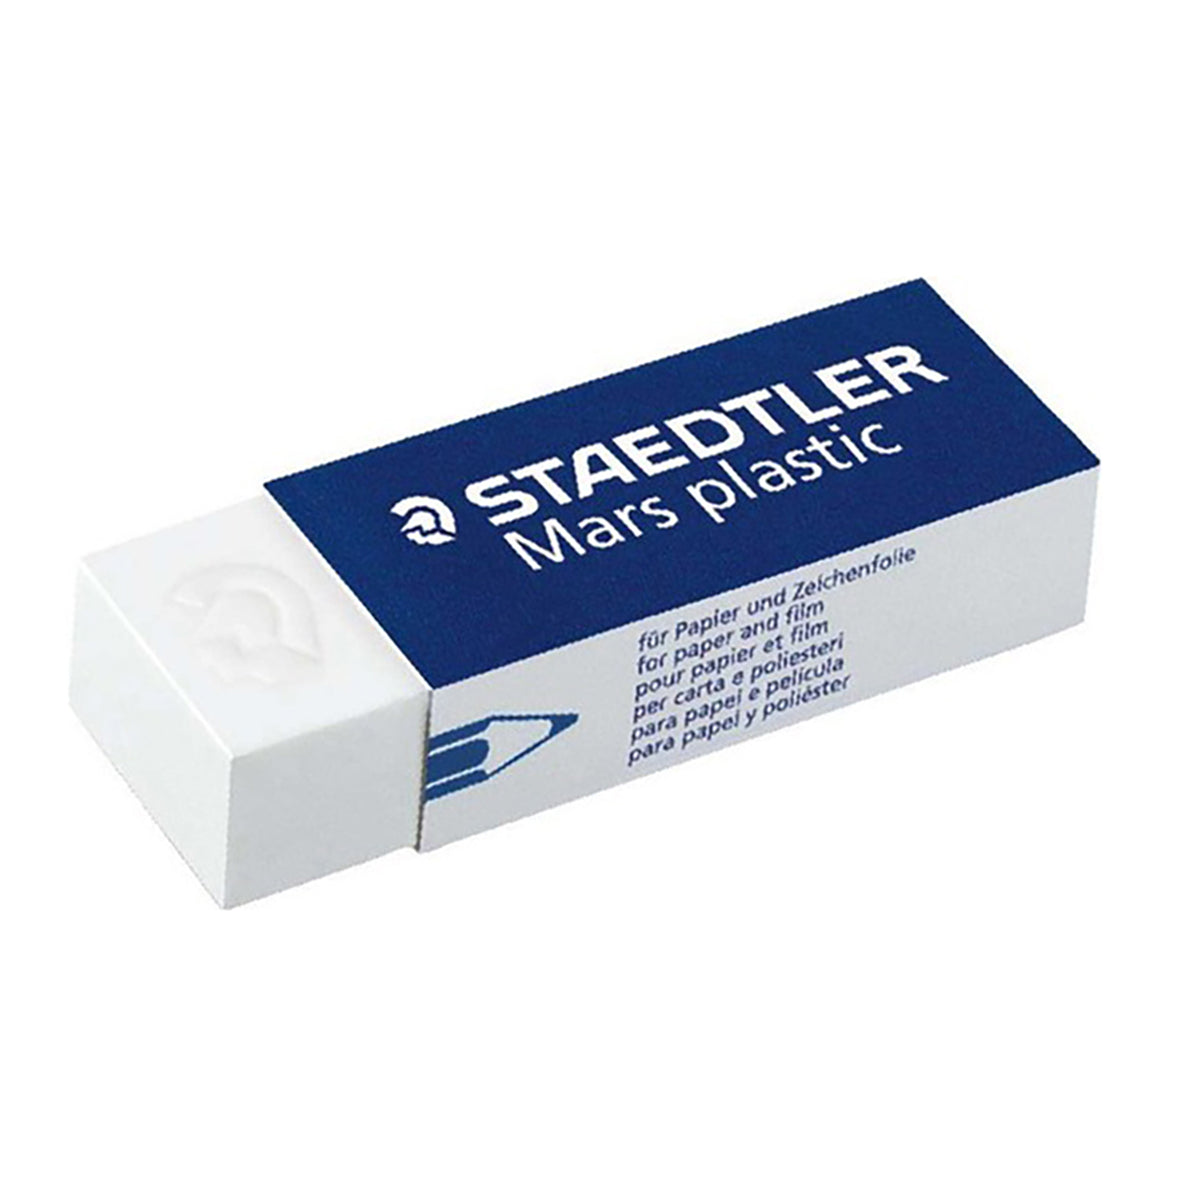 Staedtler Mars Plastic White Erasers Bulk Pack of 48 Erasers